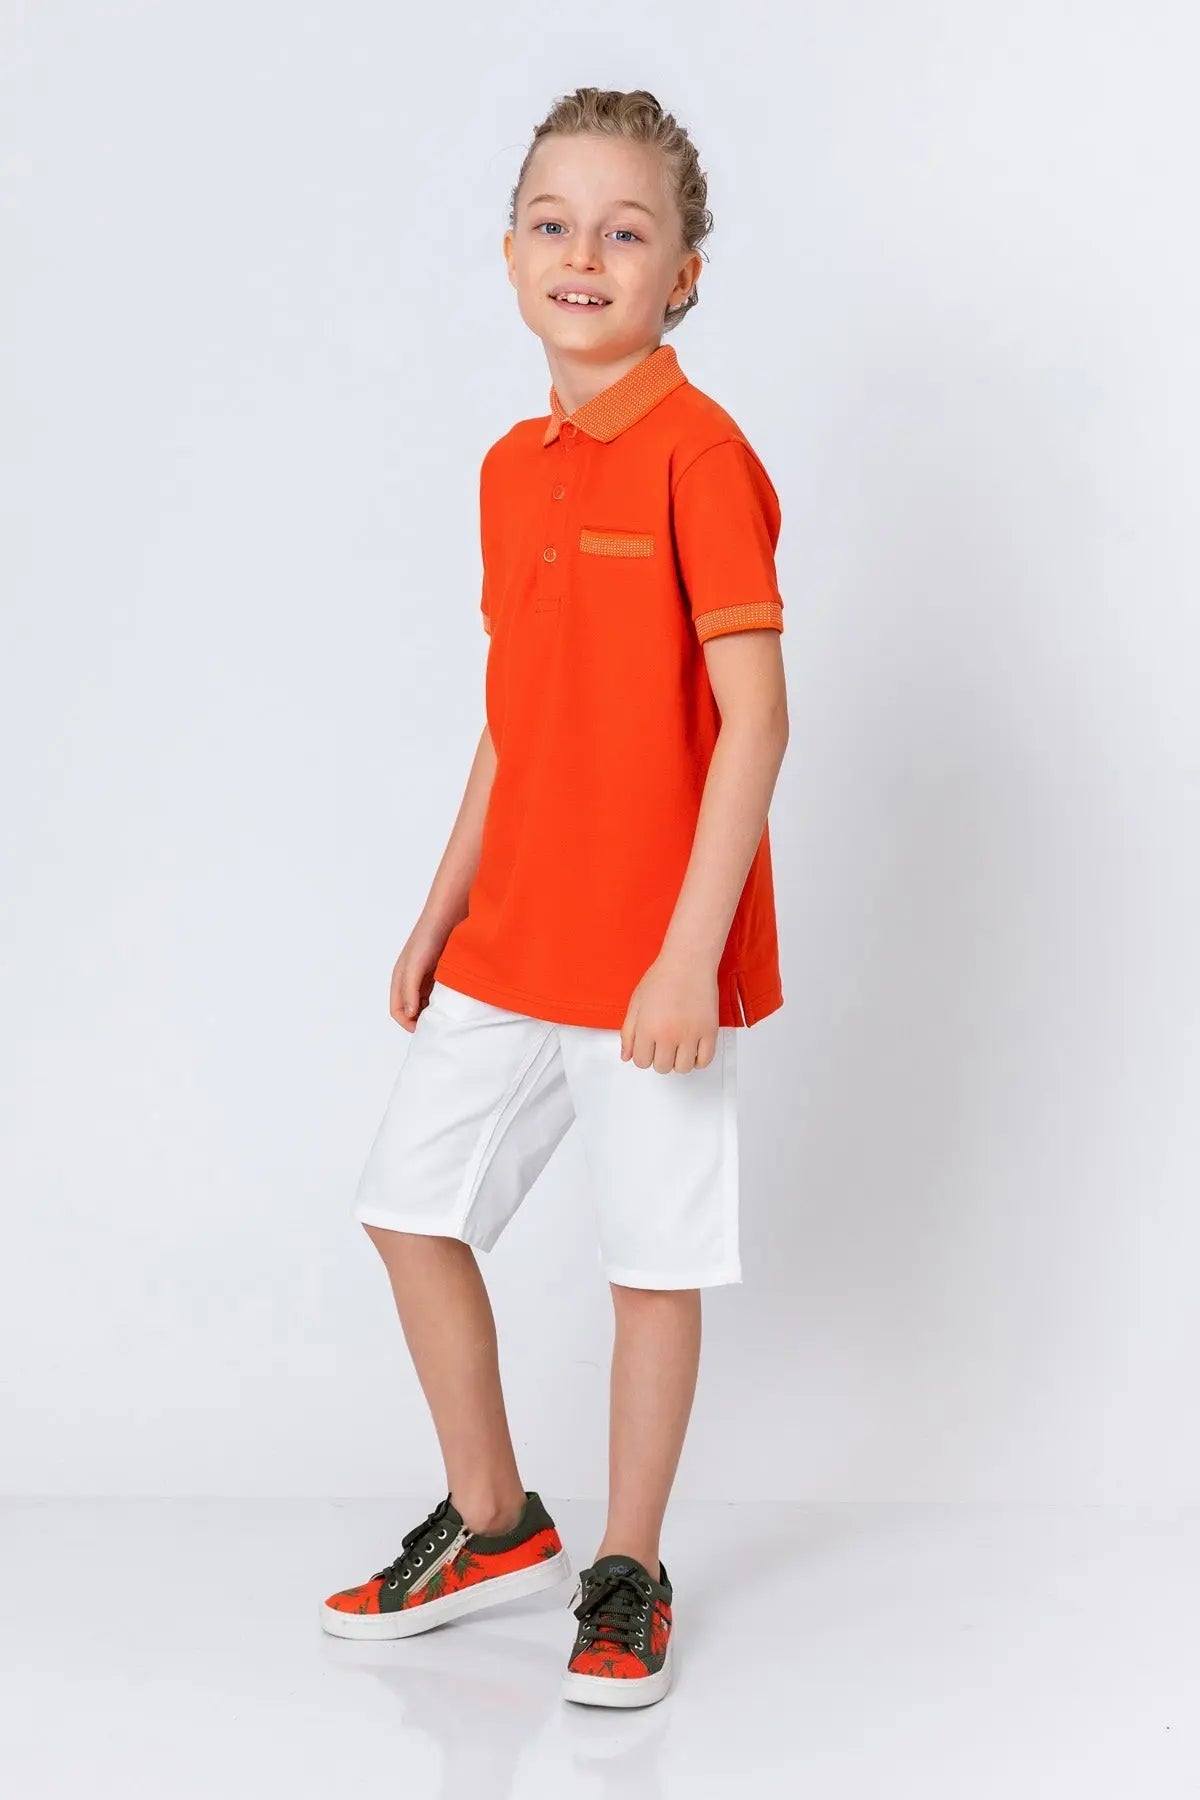 InCity Kids Boys Pattern Collar Sleeve Button Short Sleeve Polo Shirt InCity Boys & Girls